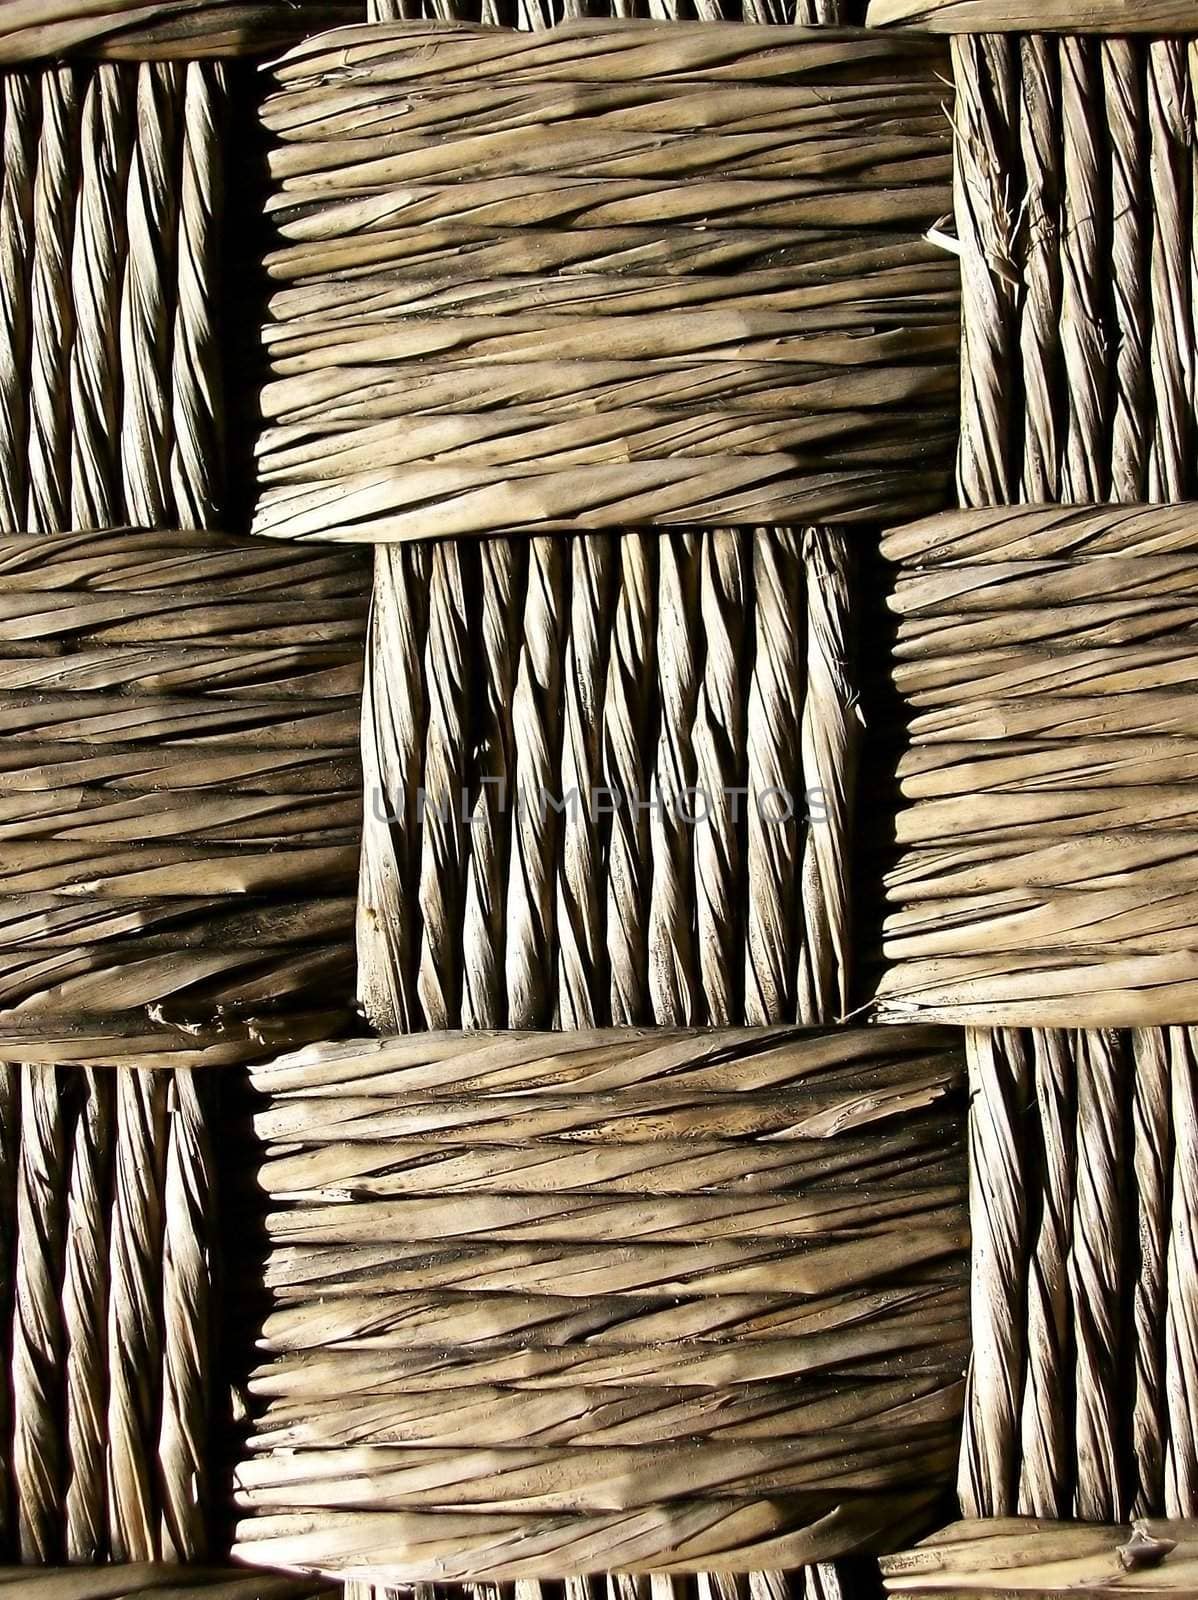 Closeup of wicker weave pattern on a chair.